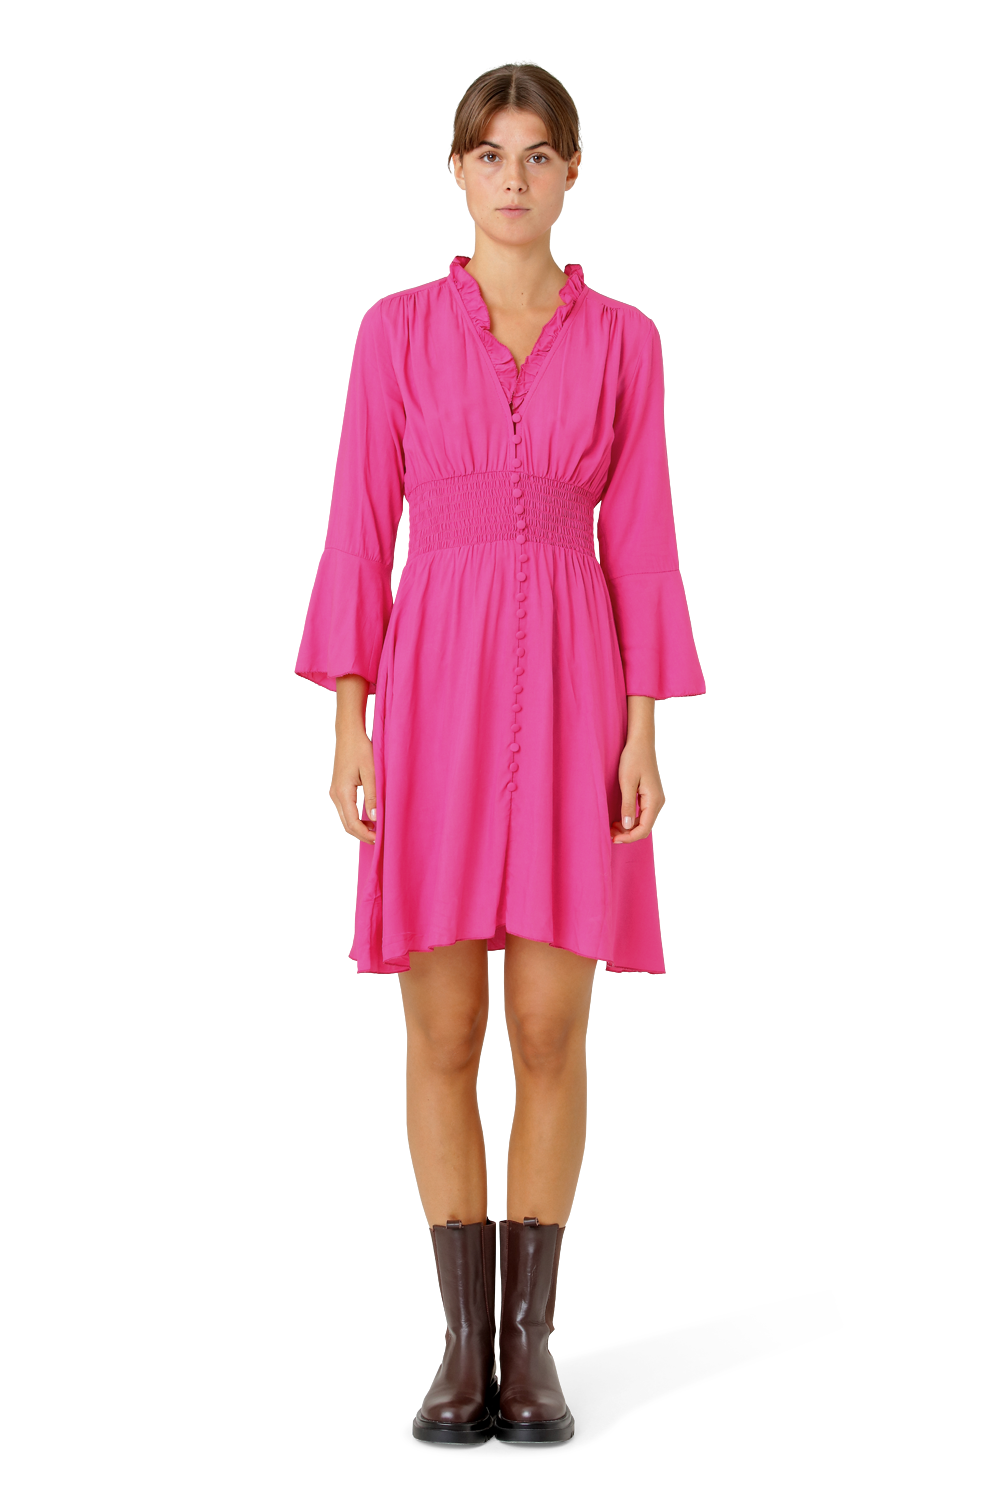 Sally Short Dress Pink Solid